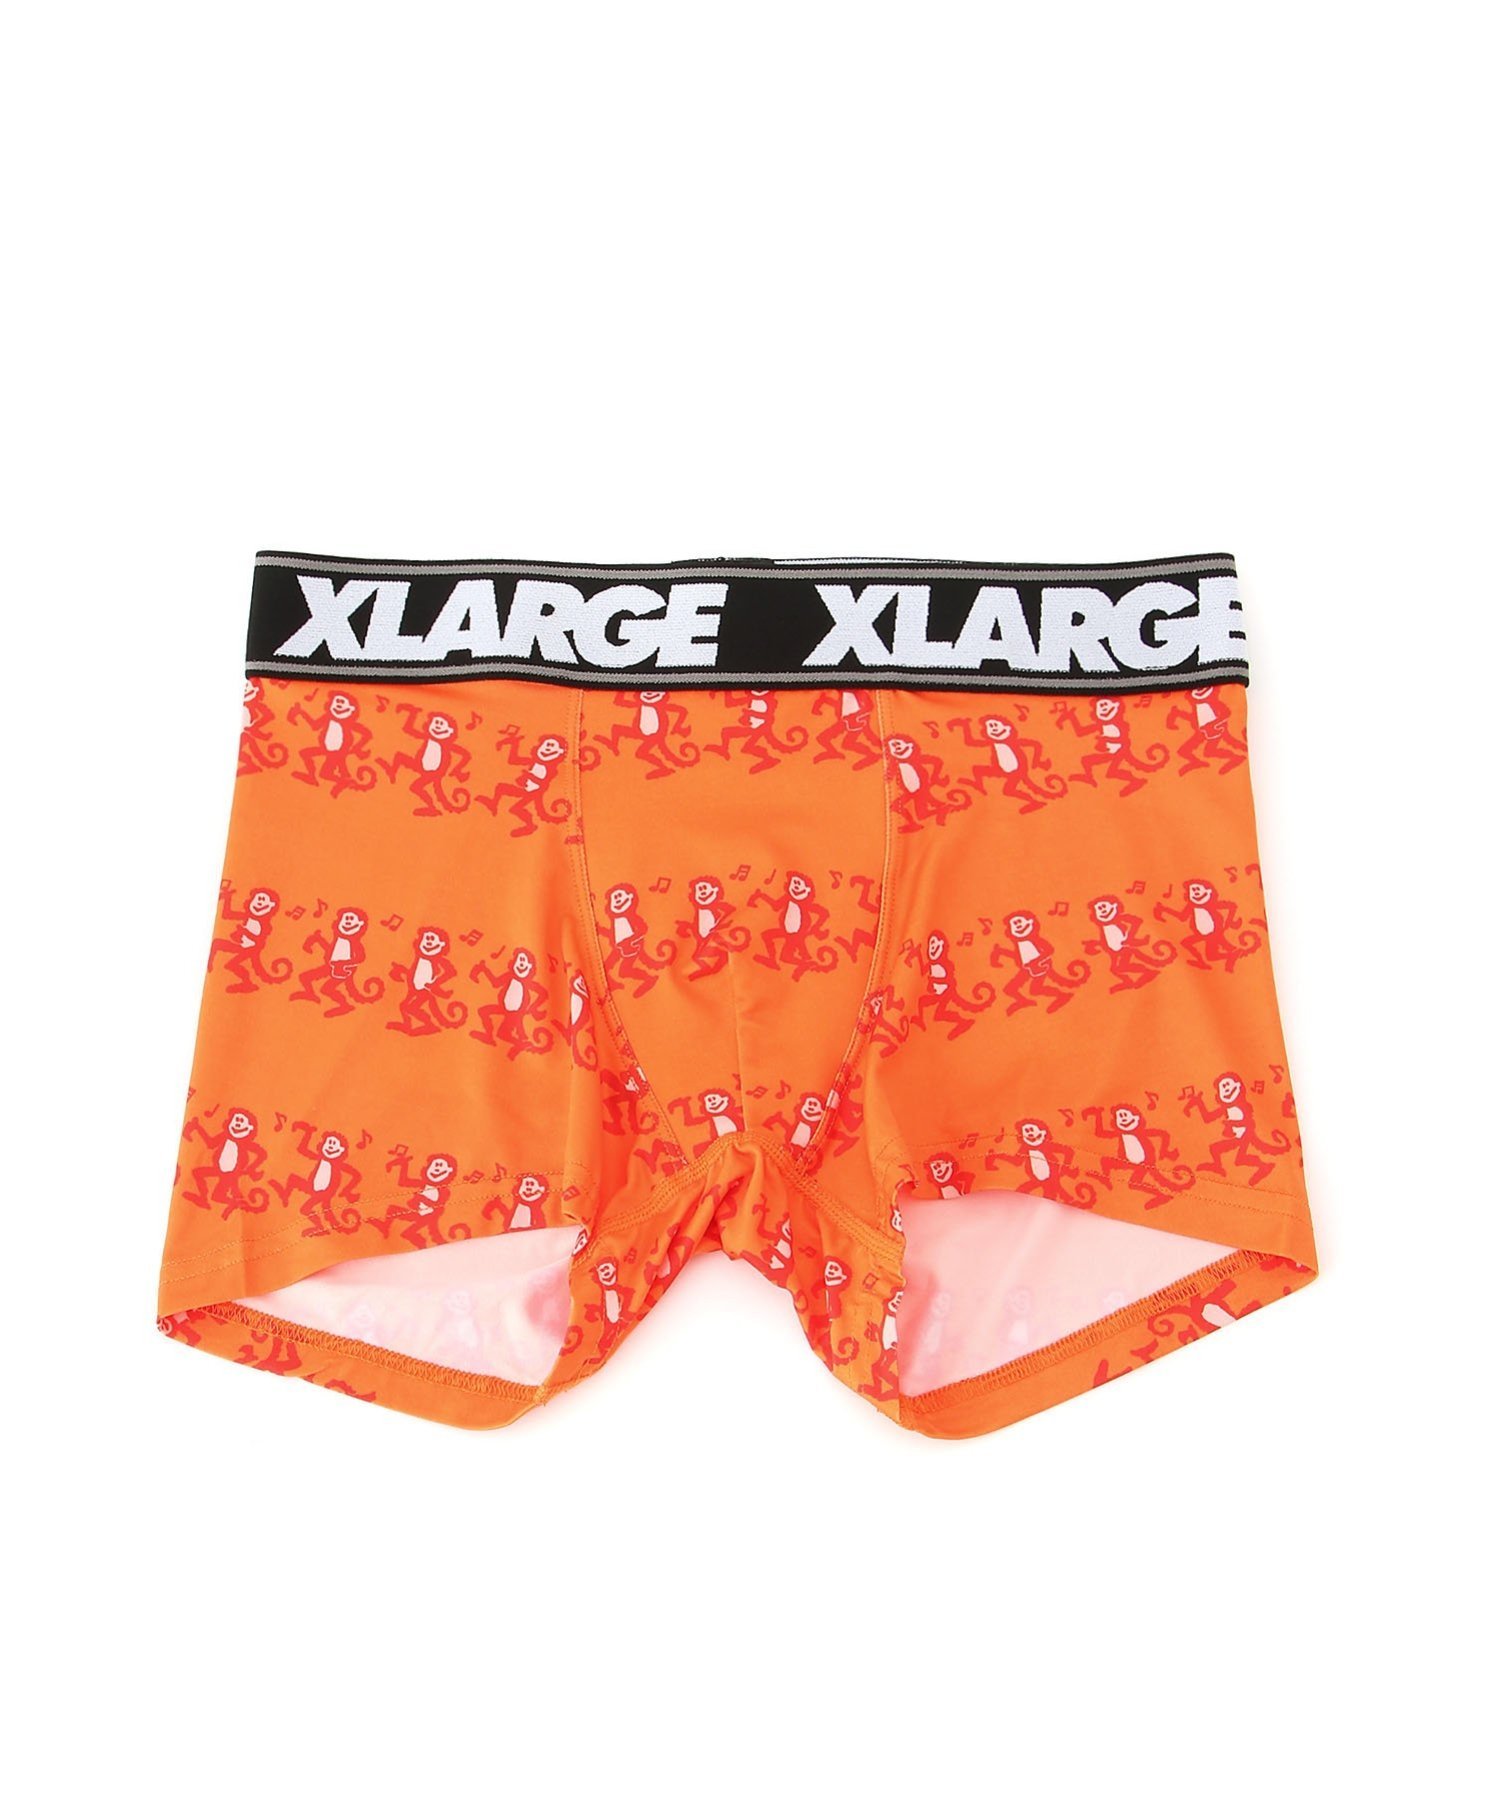 XLARGE X-LARGE/(M)XL_Dancing m